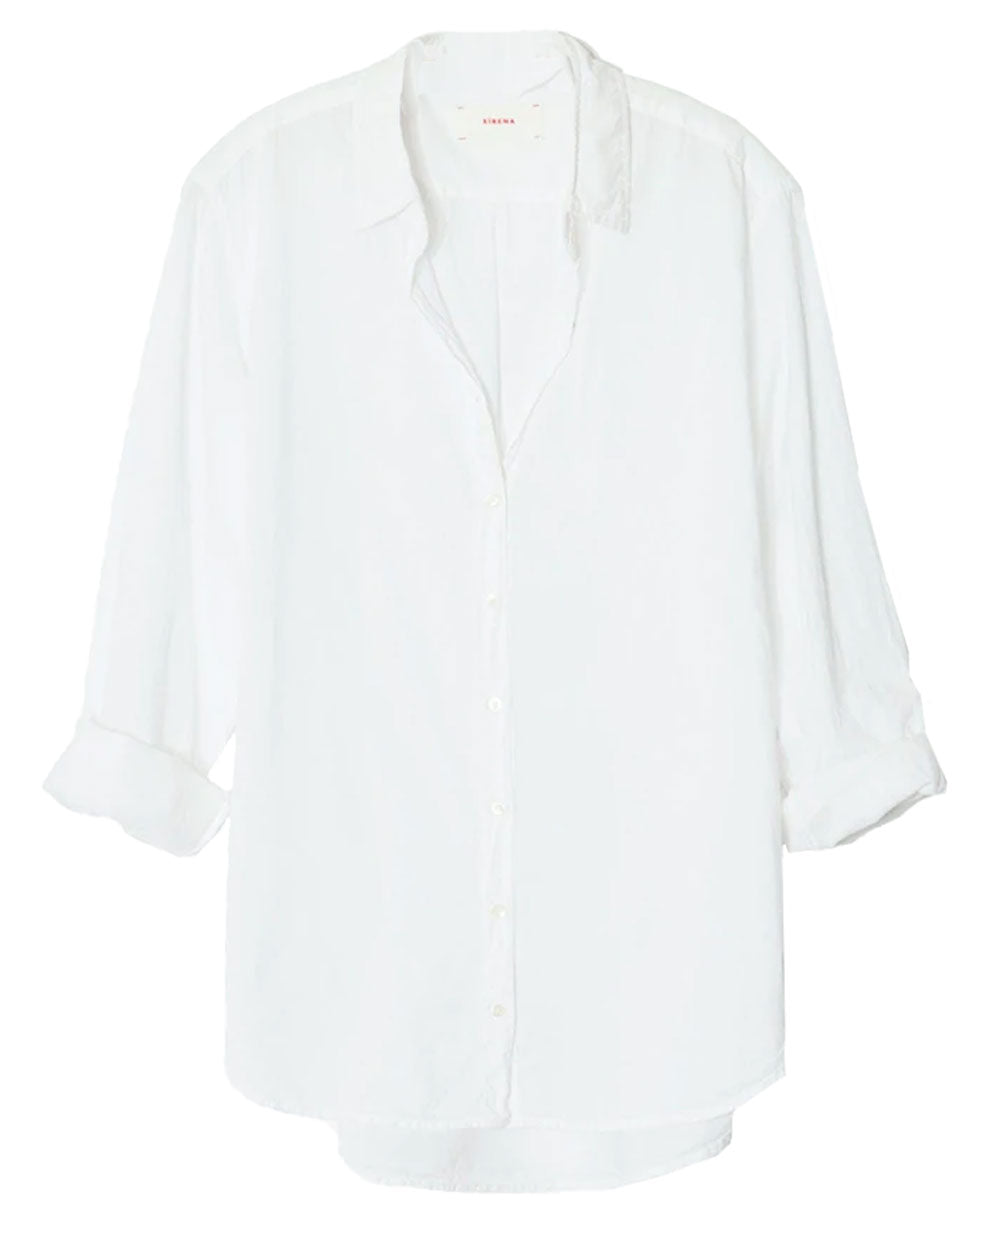 White Beau Shirt